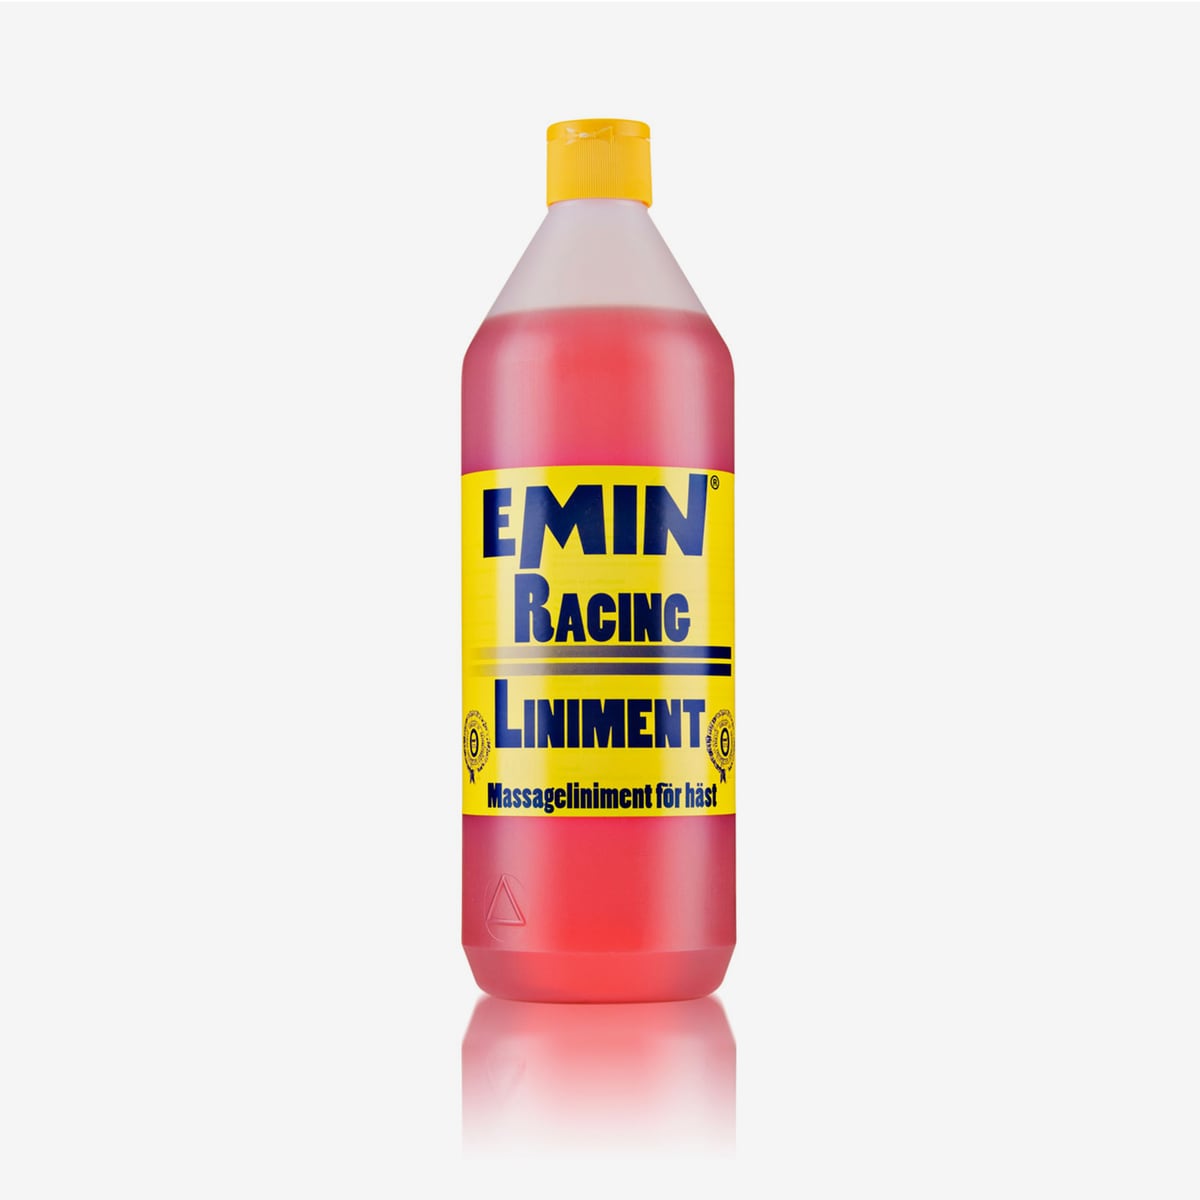 Emin Racing liniment, 1 liter